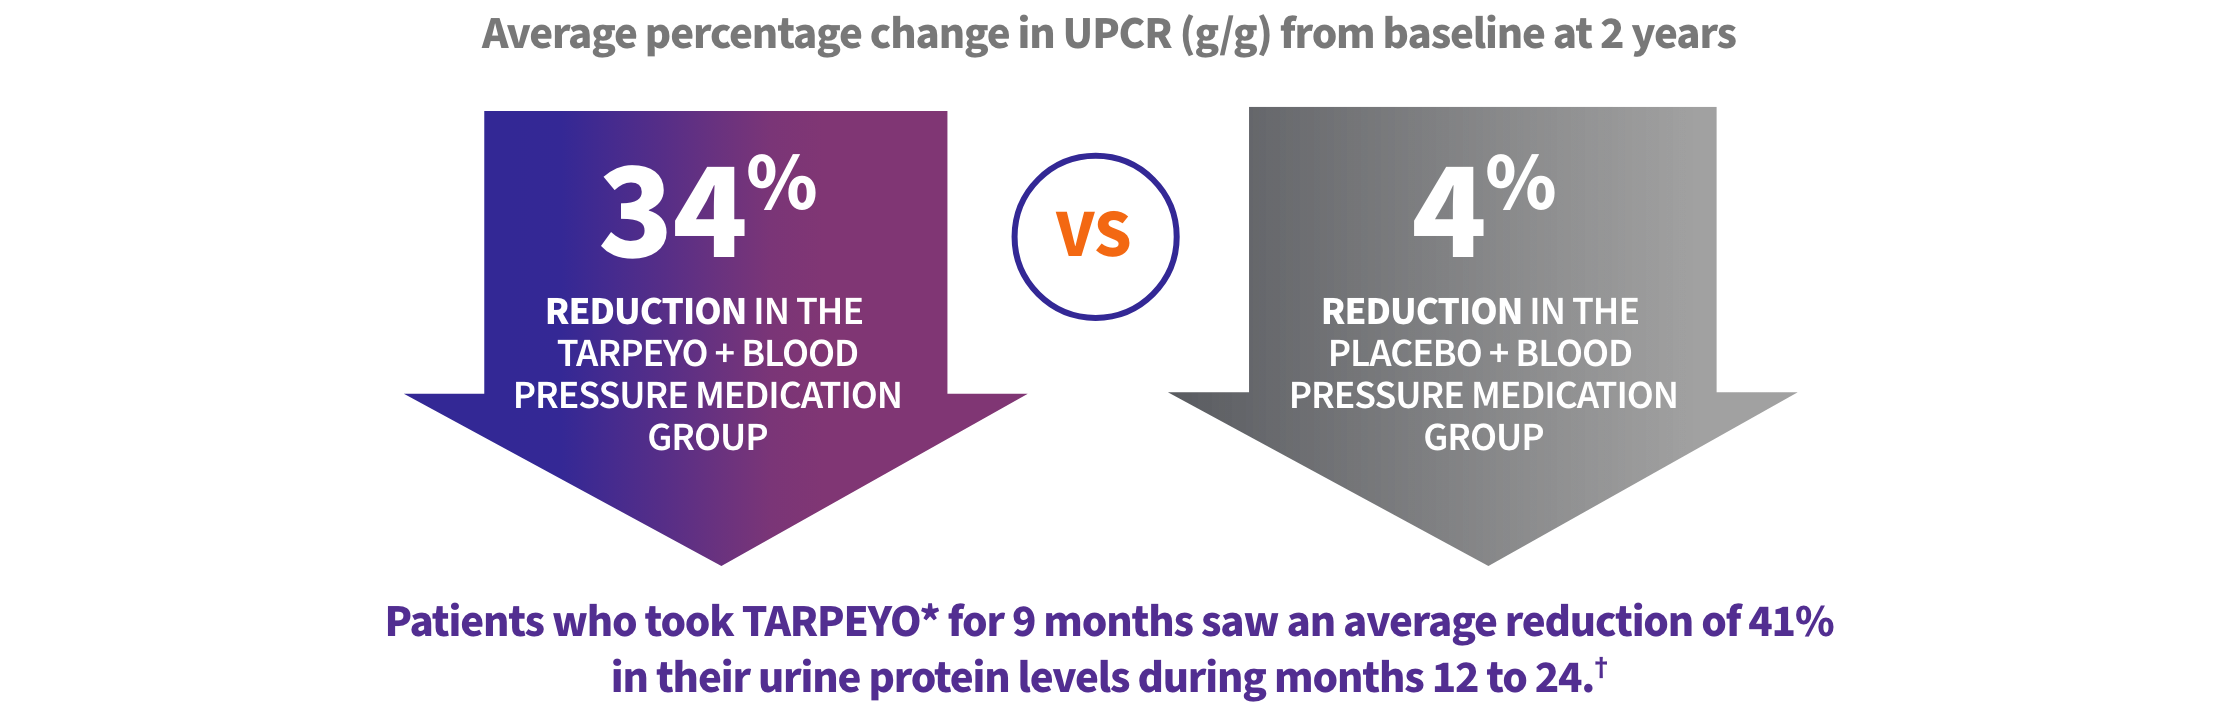 TARPEYO was shown to reduce urine protein levels vs blood pressure medication alone